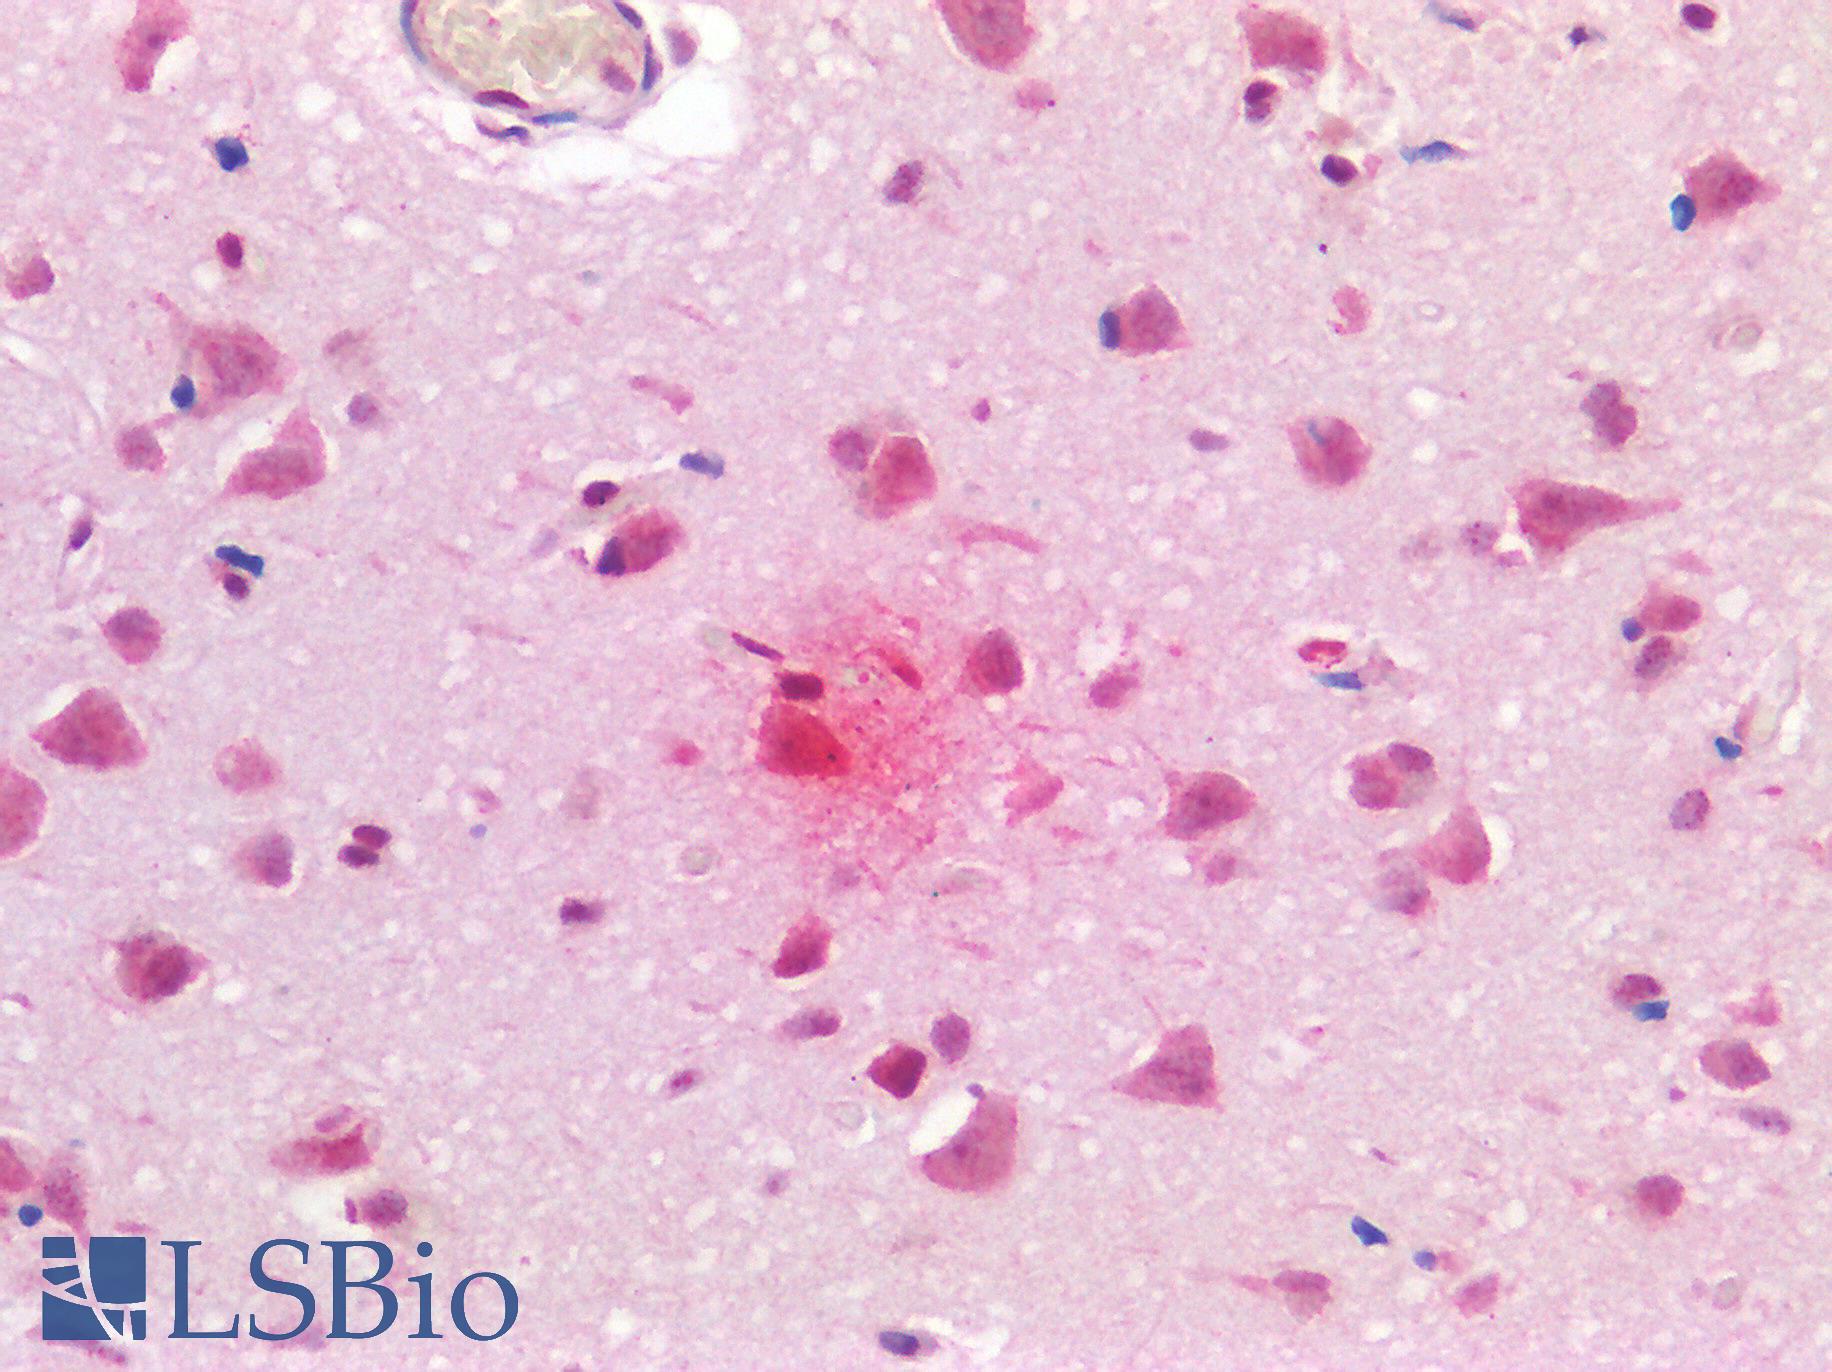 MAPT / Tau Antibody - Human Brain, Cortex, Alzheimer's Senile Plaque: Formalin-Fixed, Paraffin-Embedded (FFPE)